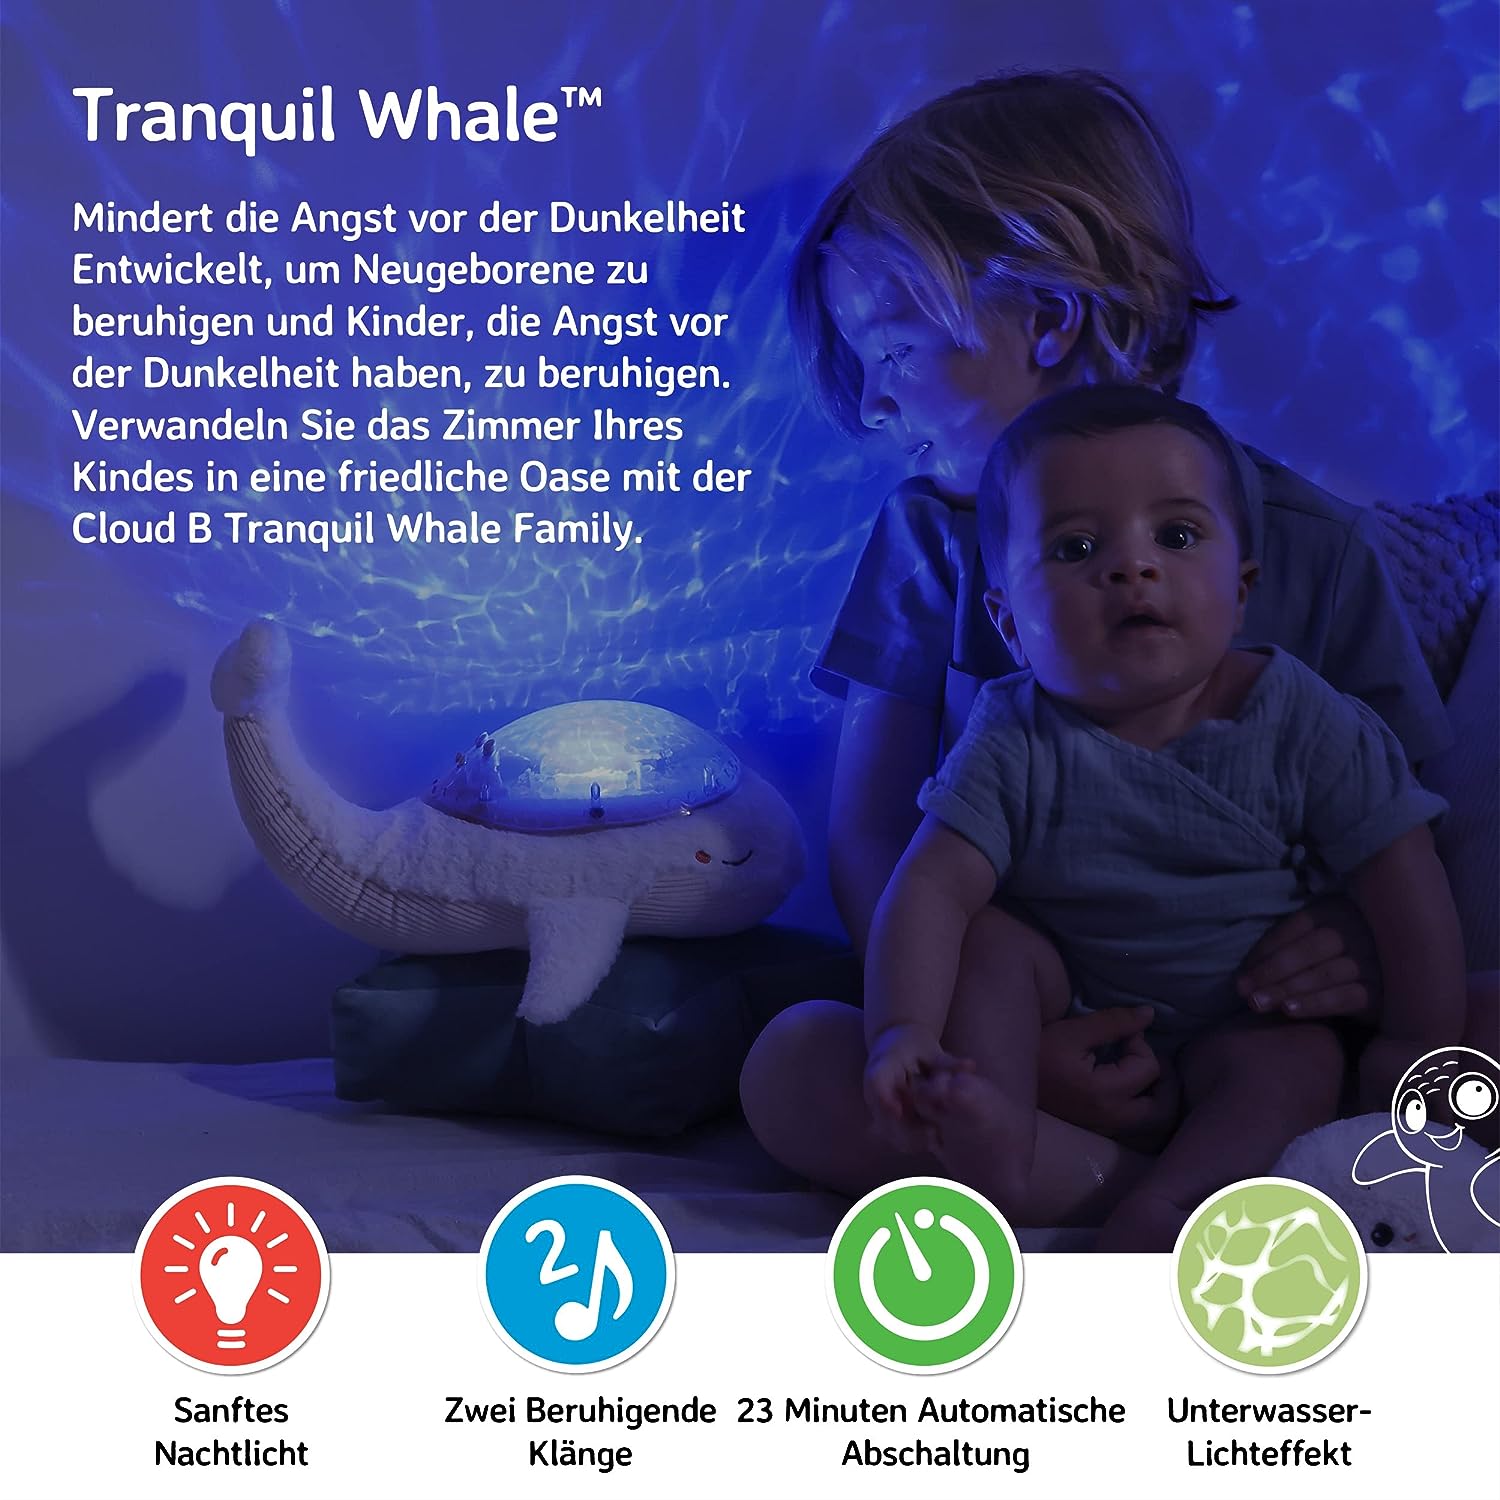 Tranquil-Whale-Family-weiss-Nachtlicht-berlindeluxe-wal-weiß-box-kinder-baby